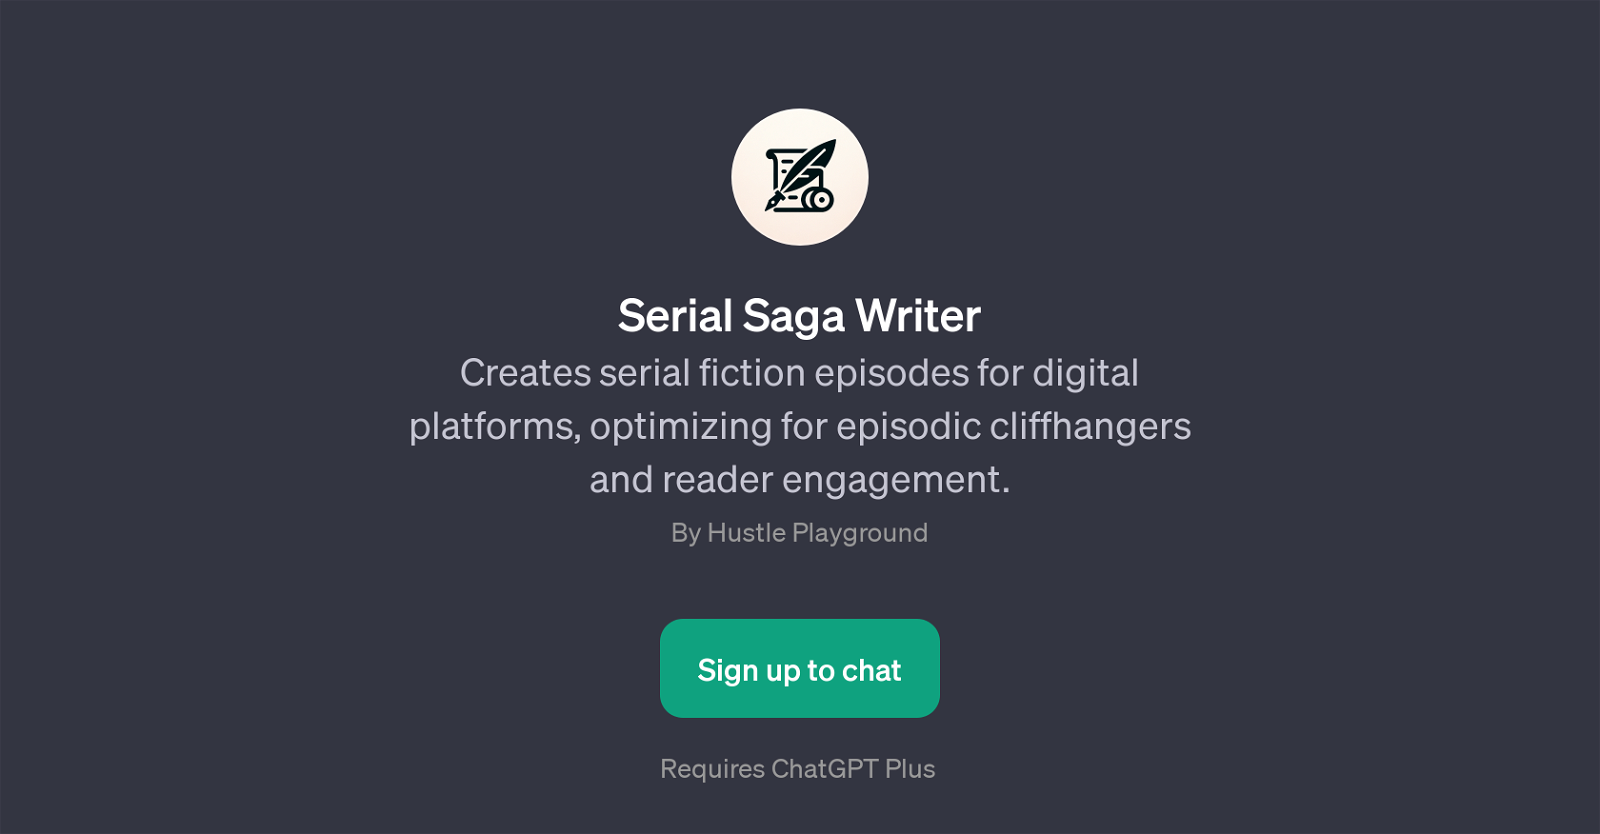 Serial Saga Writer website